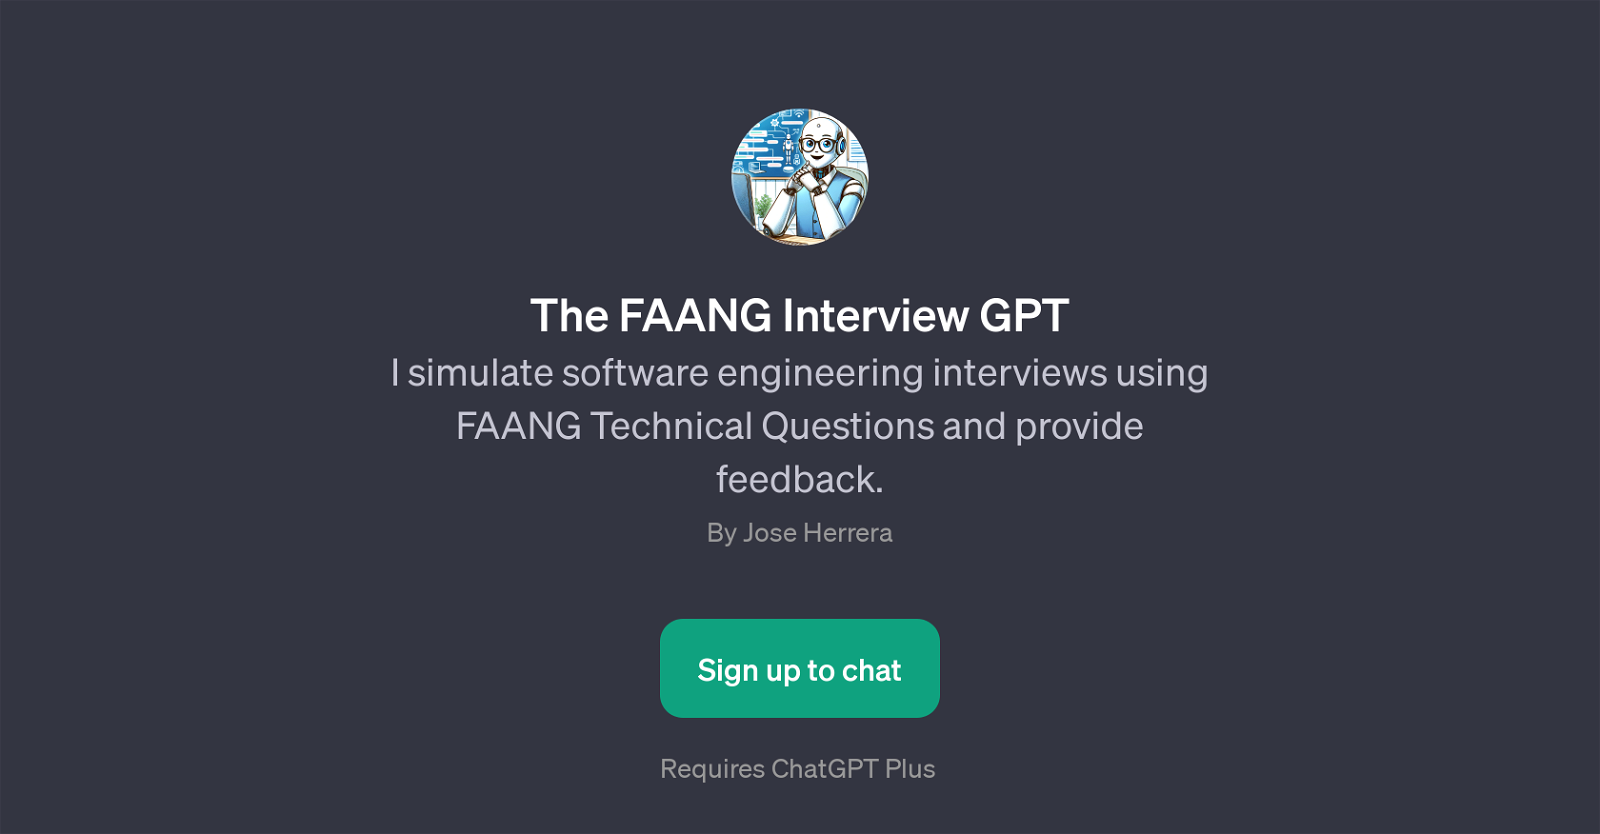 The FAANG Interview GPT website